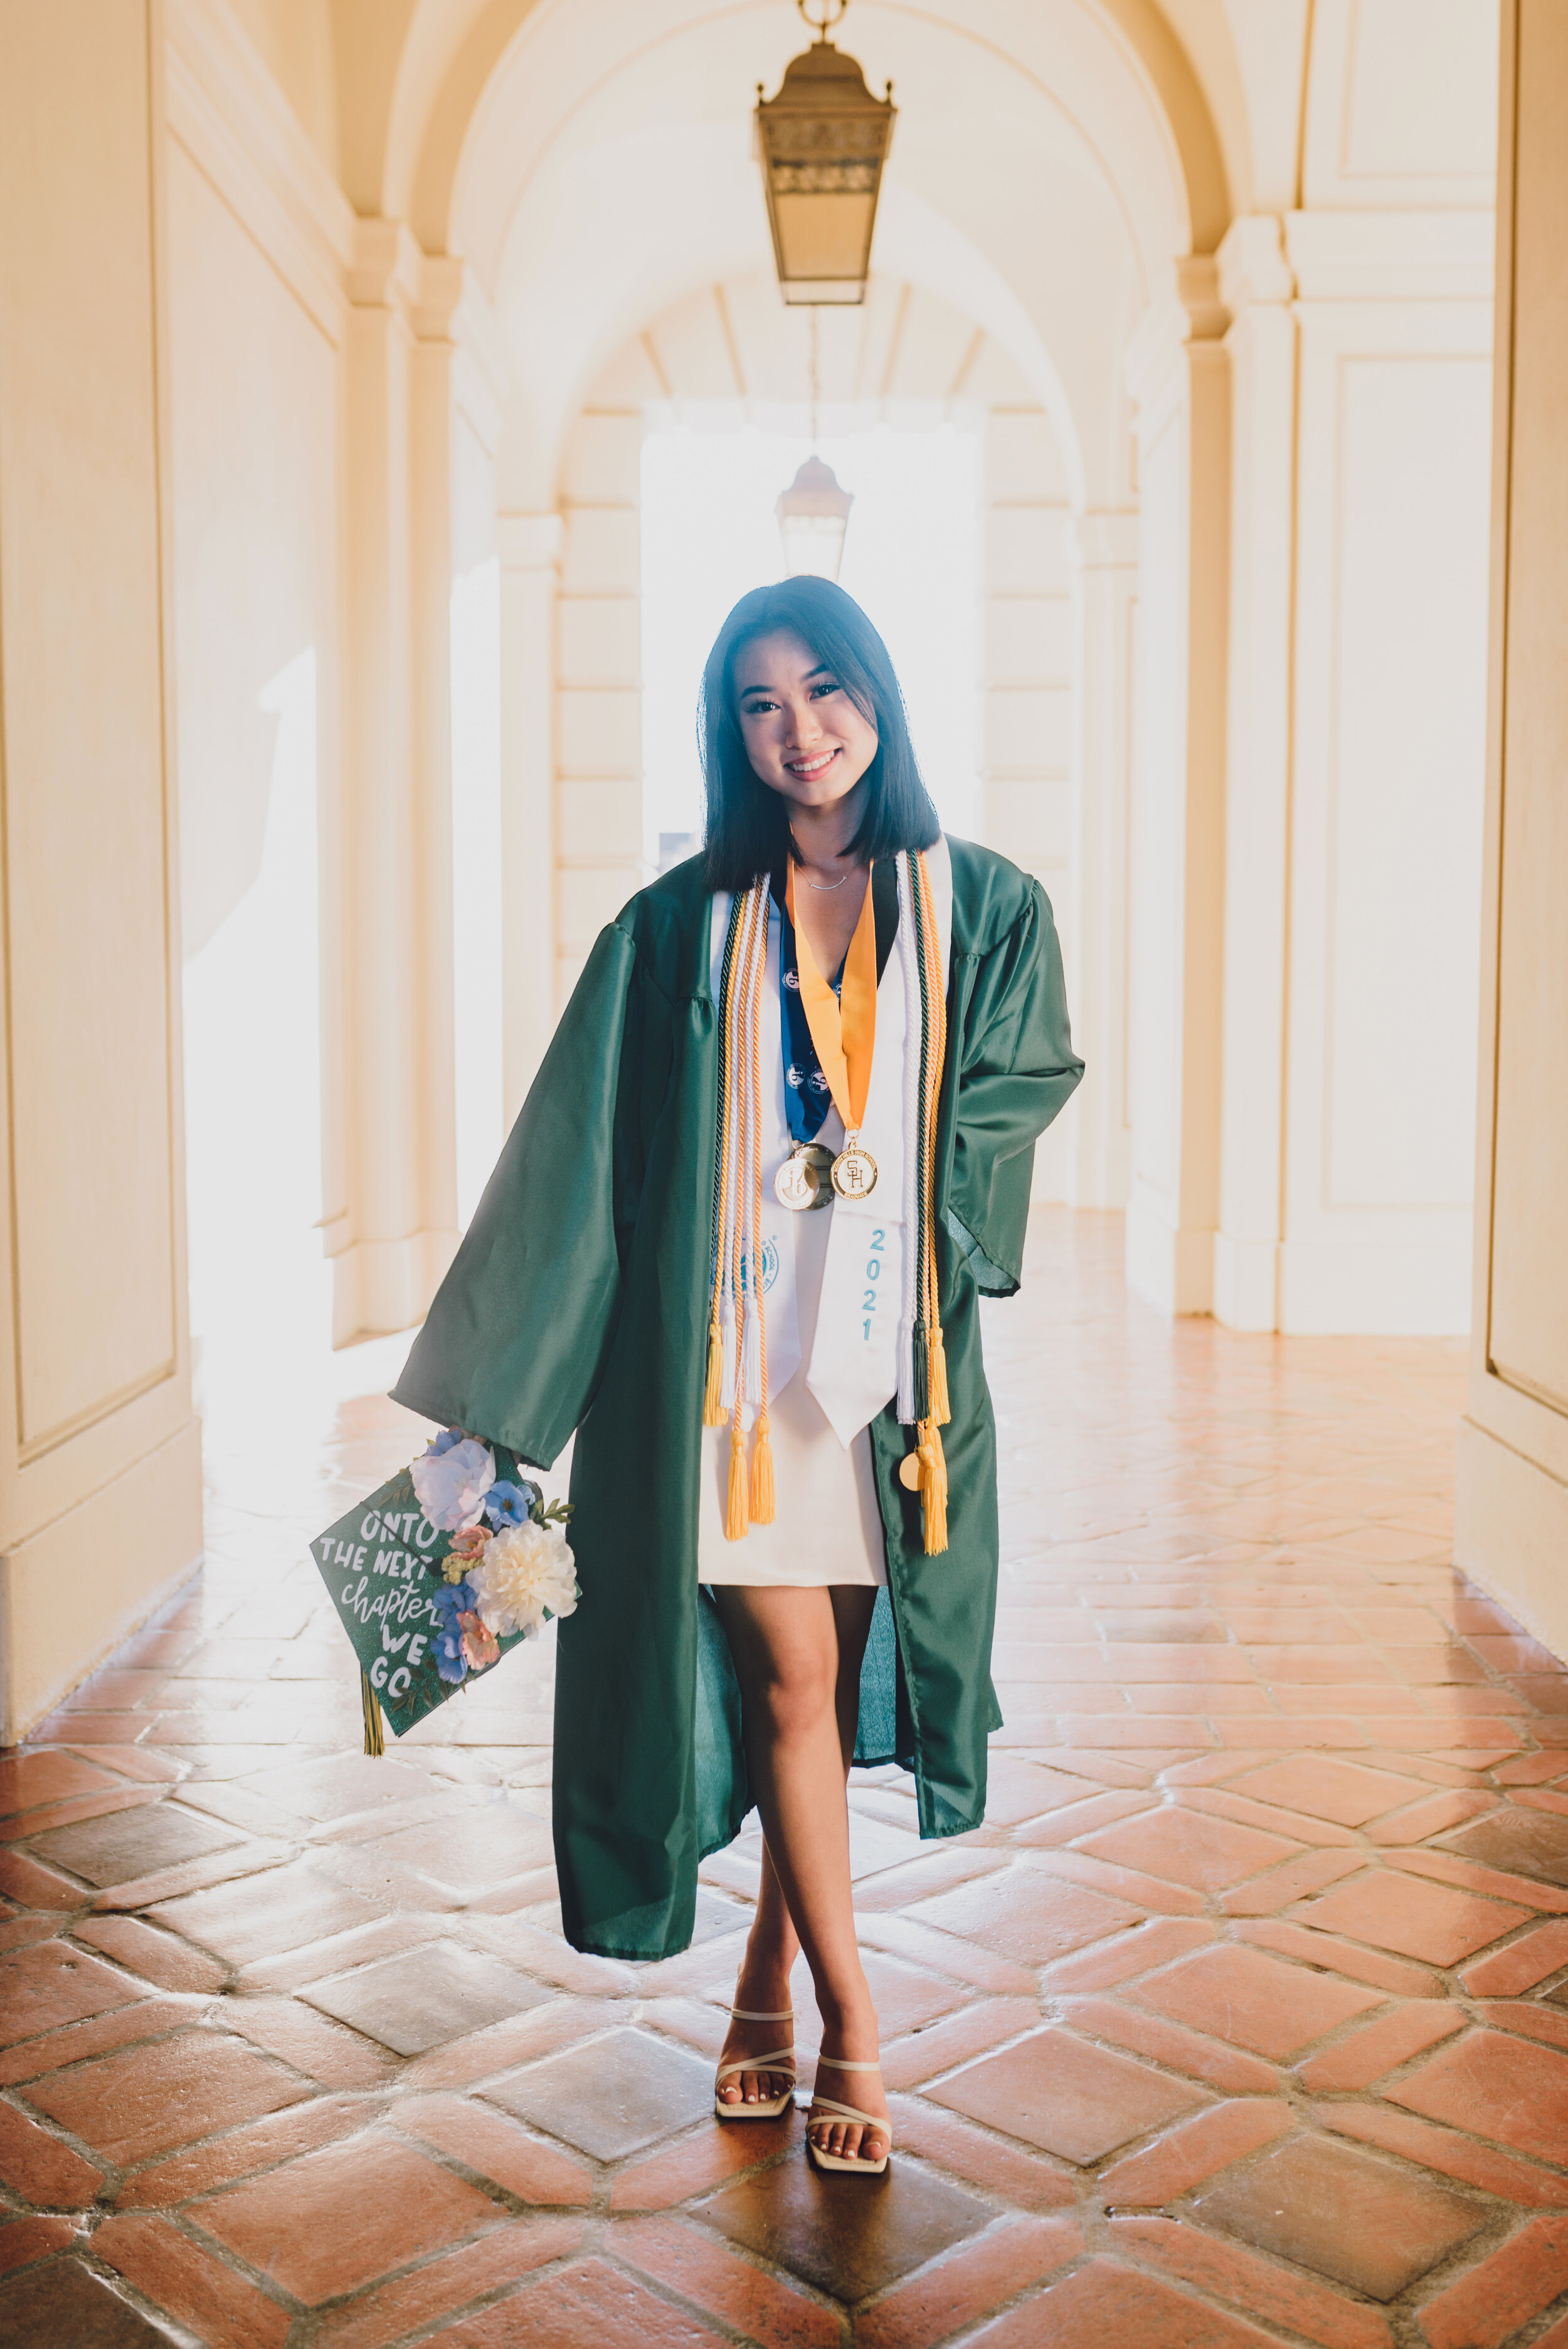 LosAngeles-Graduation-Portrait-Photographer-High-School-54.jpg